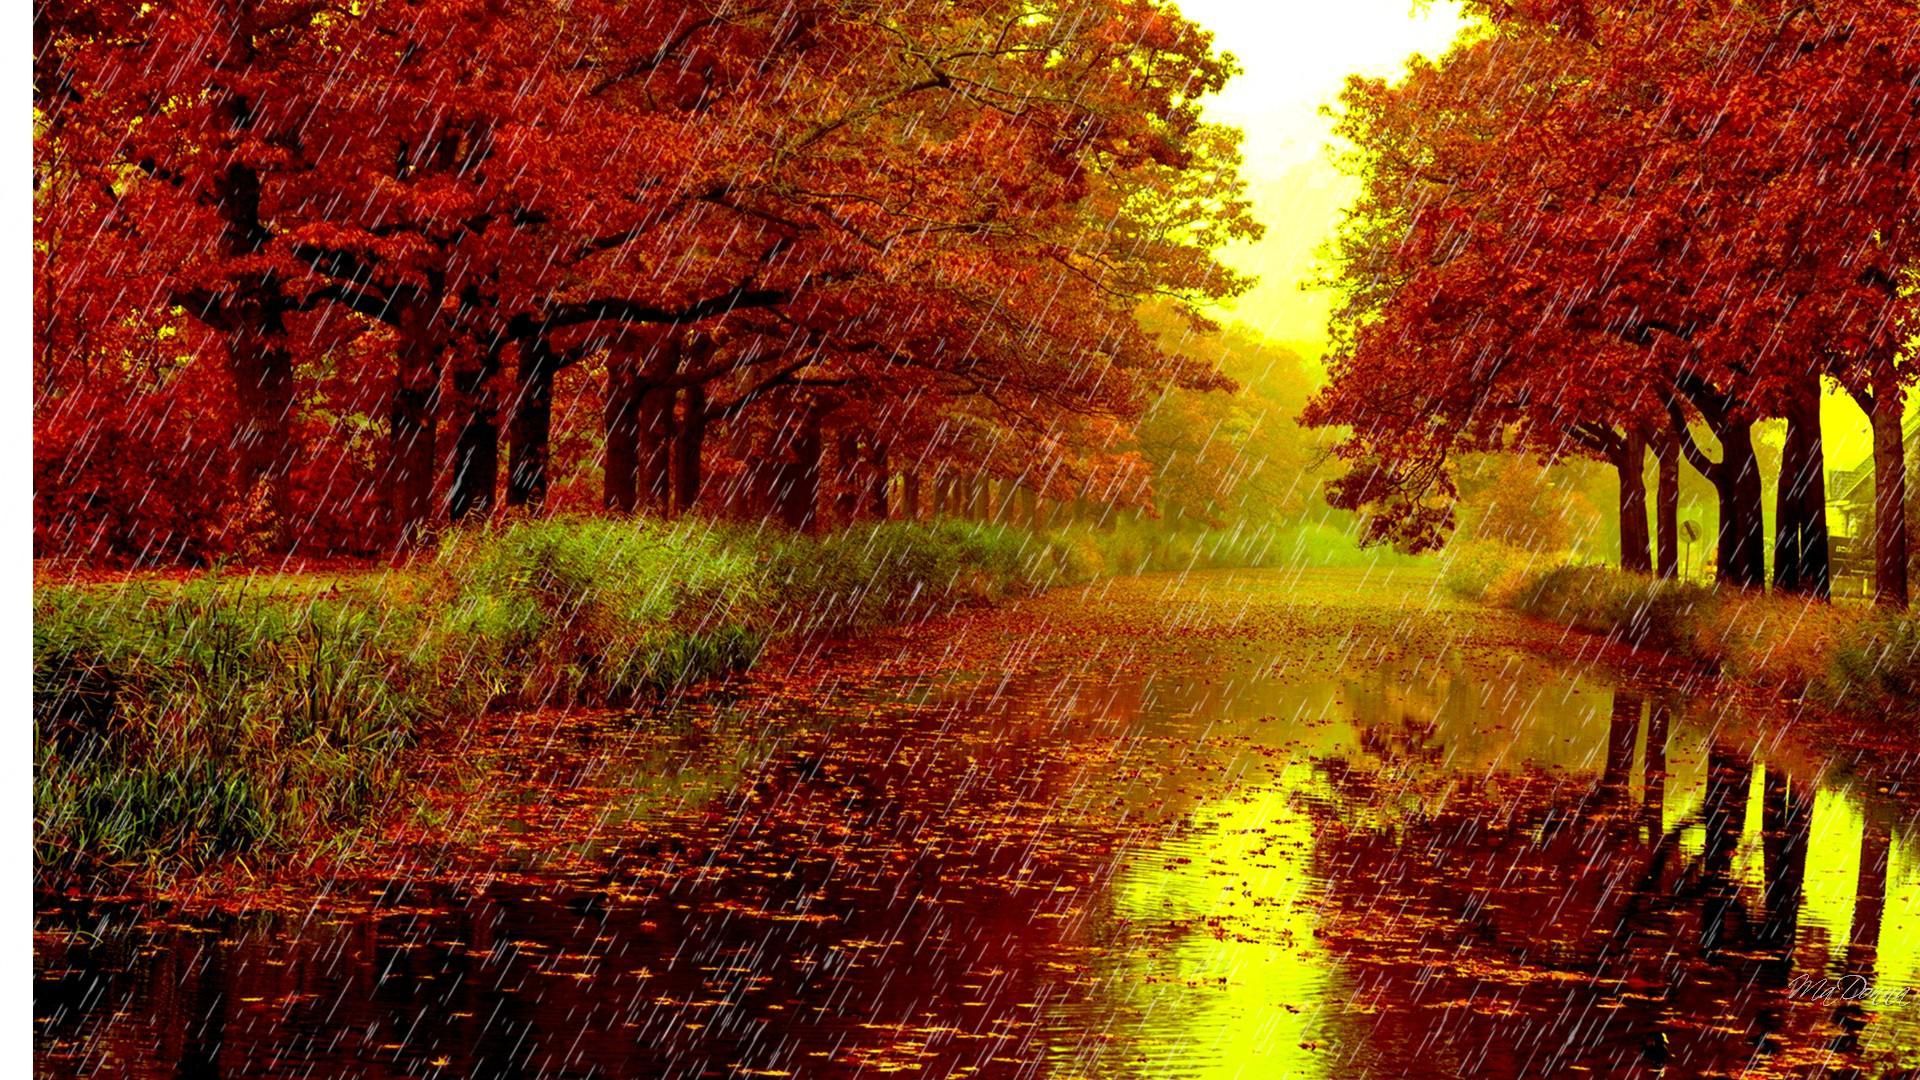 Rainy day in the autumn season free wallpaper. Autumn rain, Autumn season image, Fall wallpaper